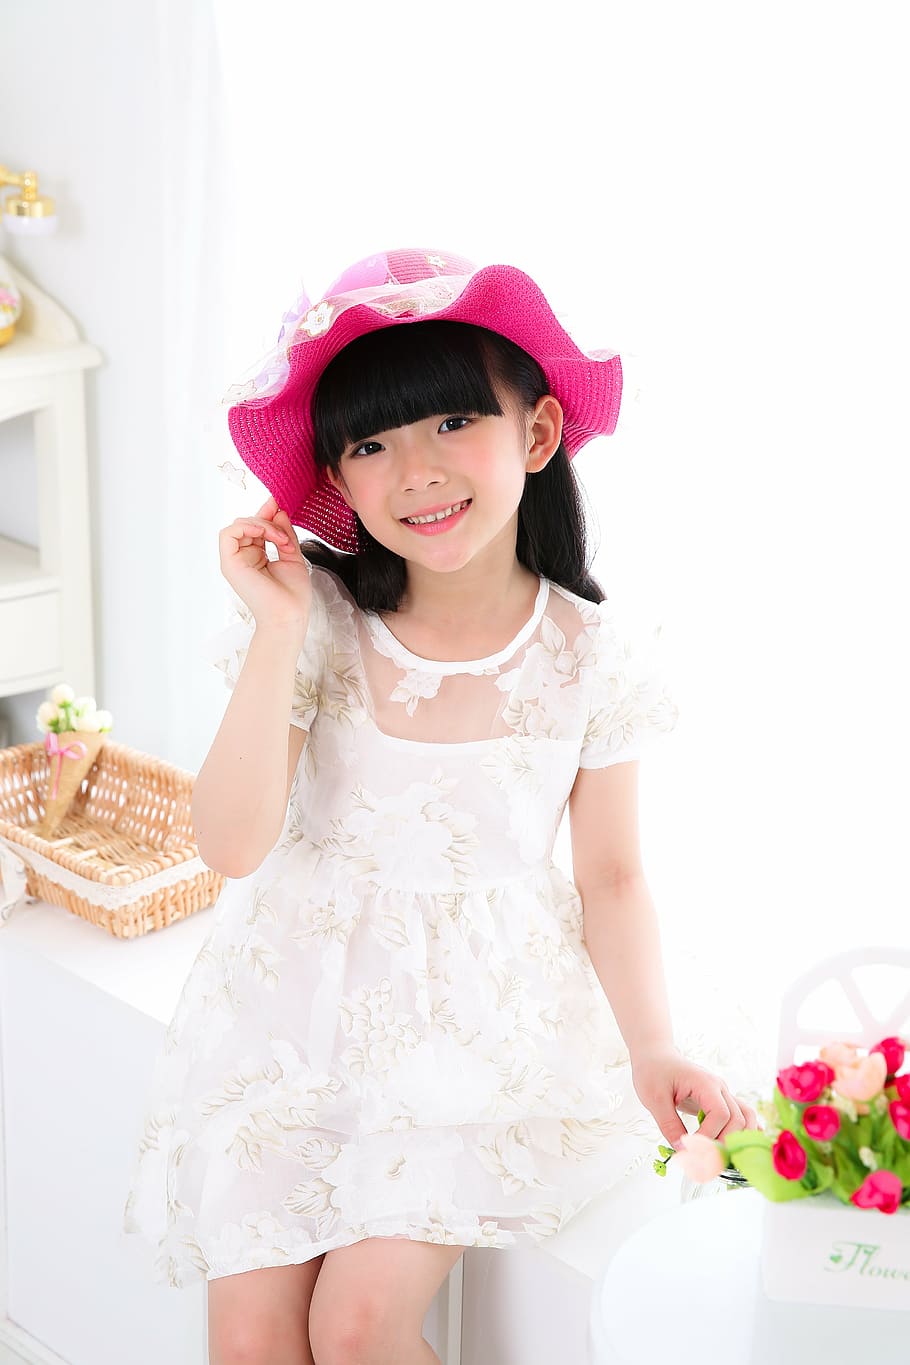 child, girls, portrait, white dress, hat, bid, asia, smiling, cheerful, cute